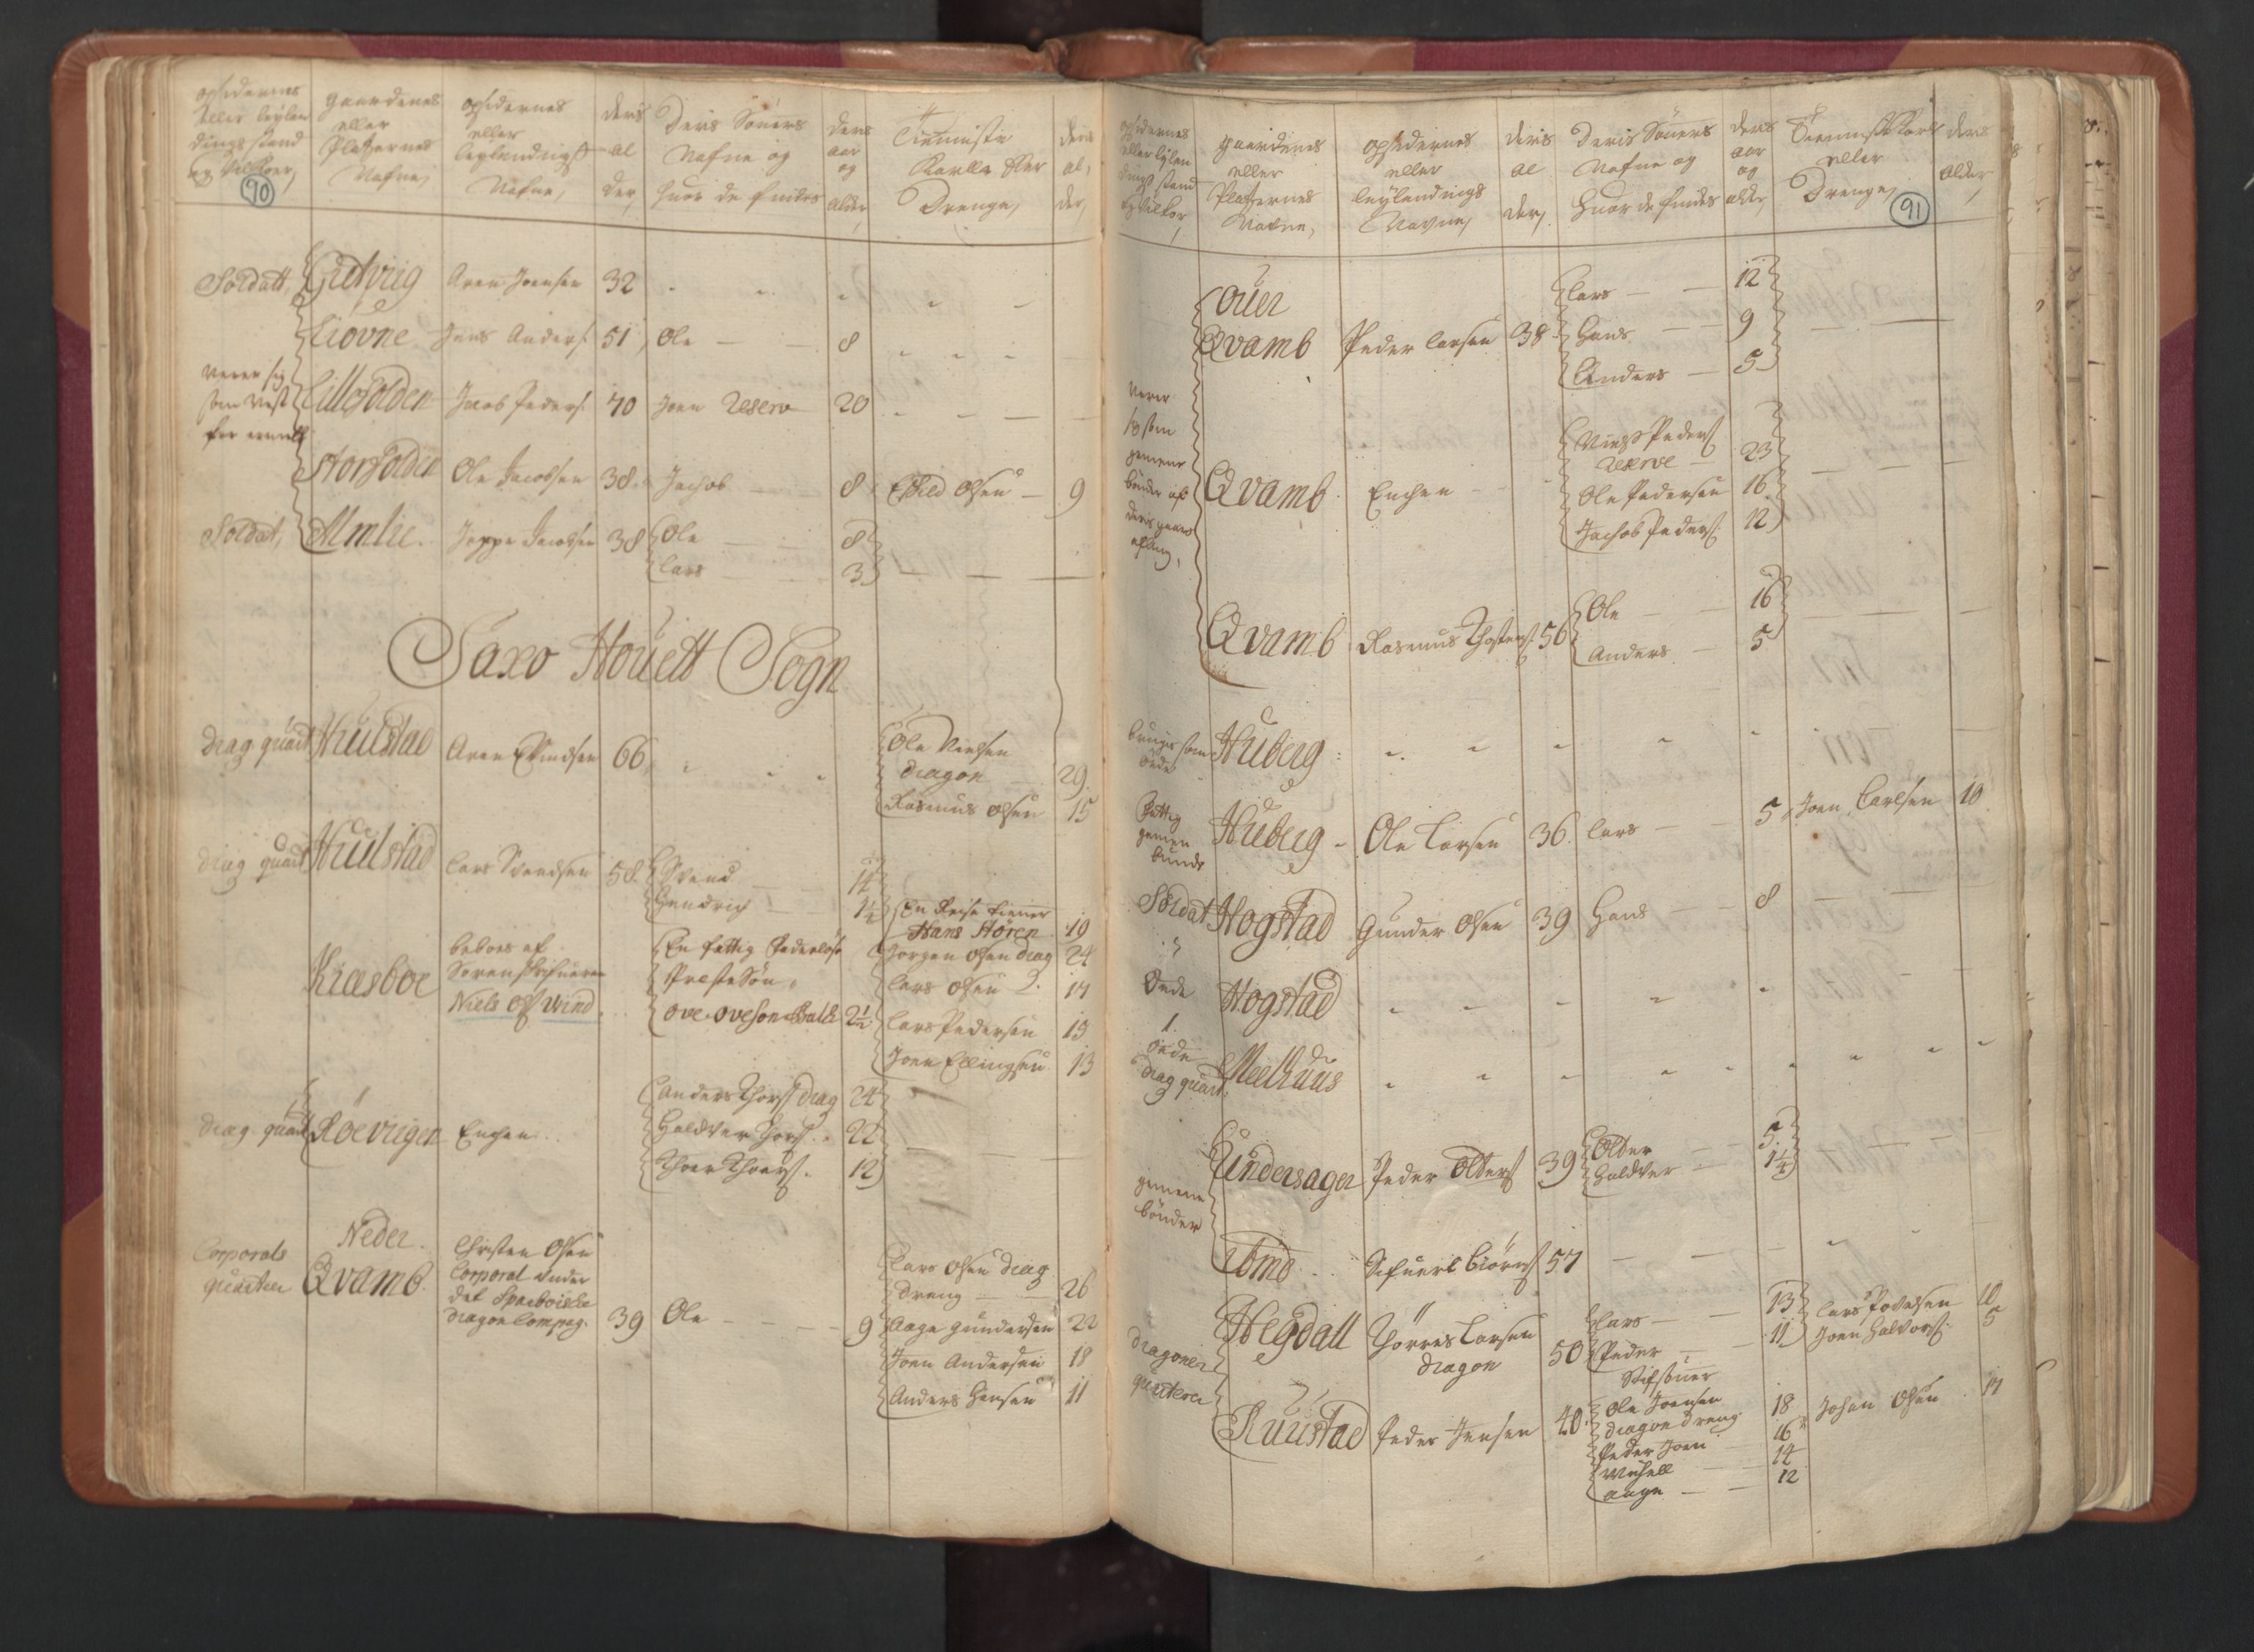 RA, Census (manntall) 1701, no. 15: Inderøy fogderi and Namdal fogderi, 1701, p. 90-91